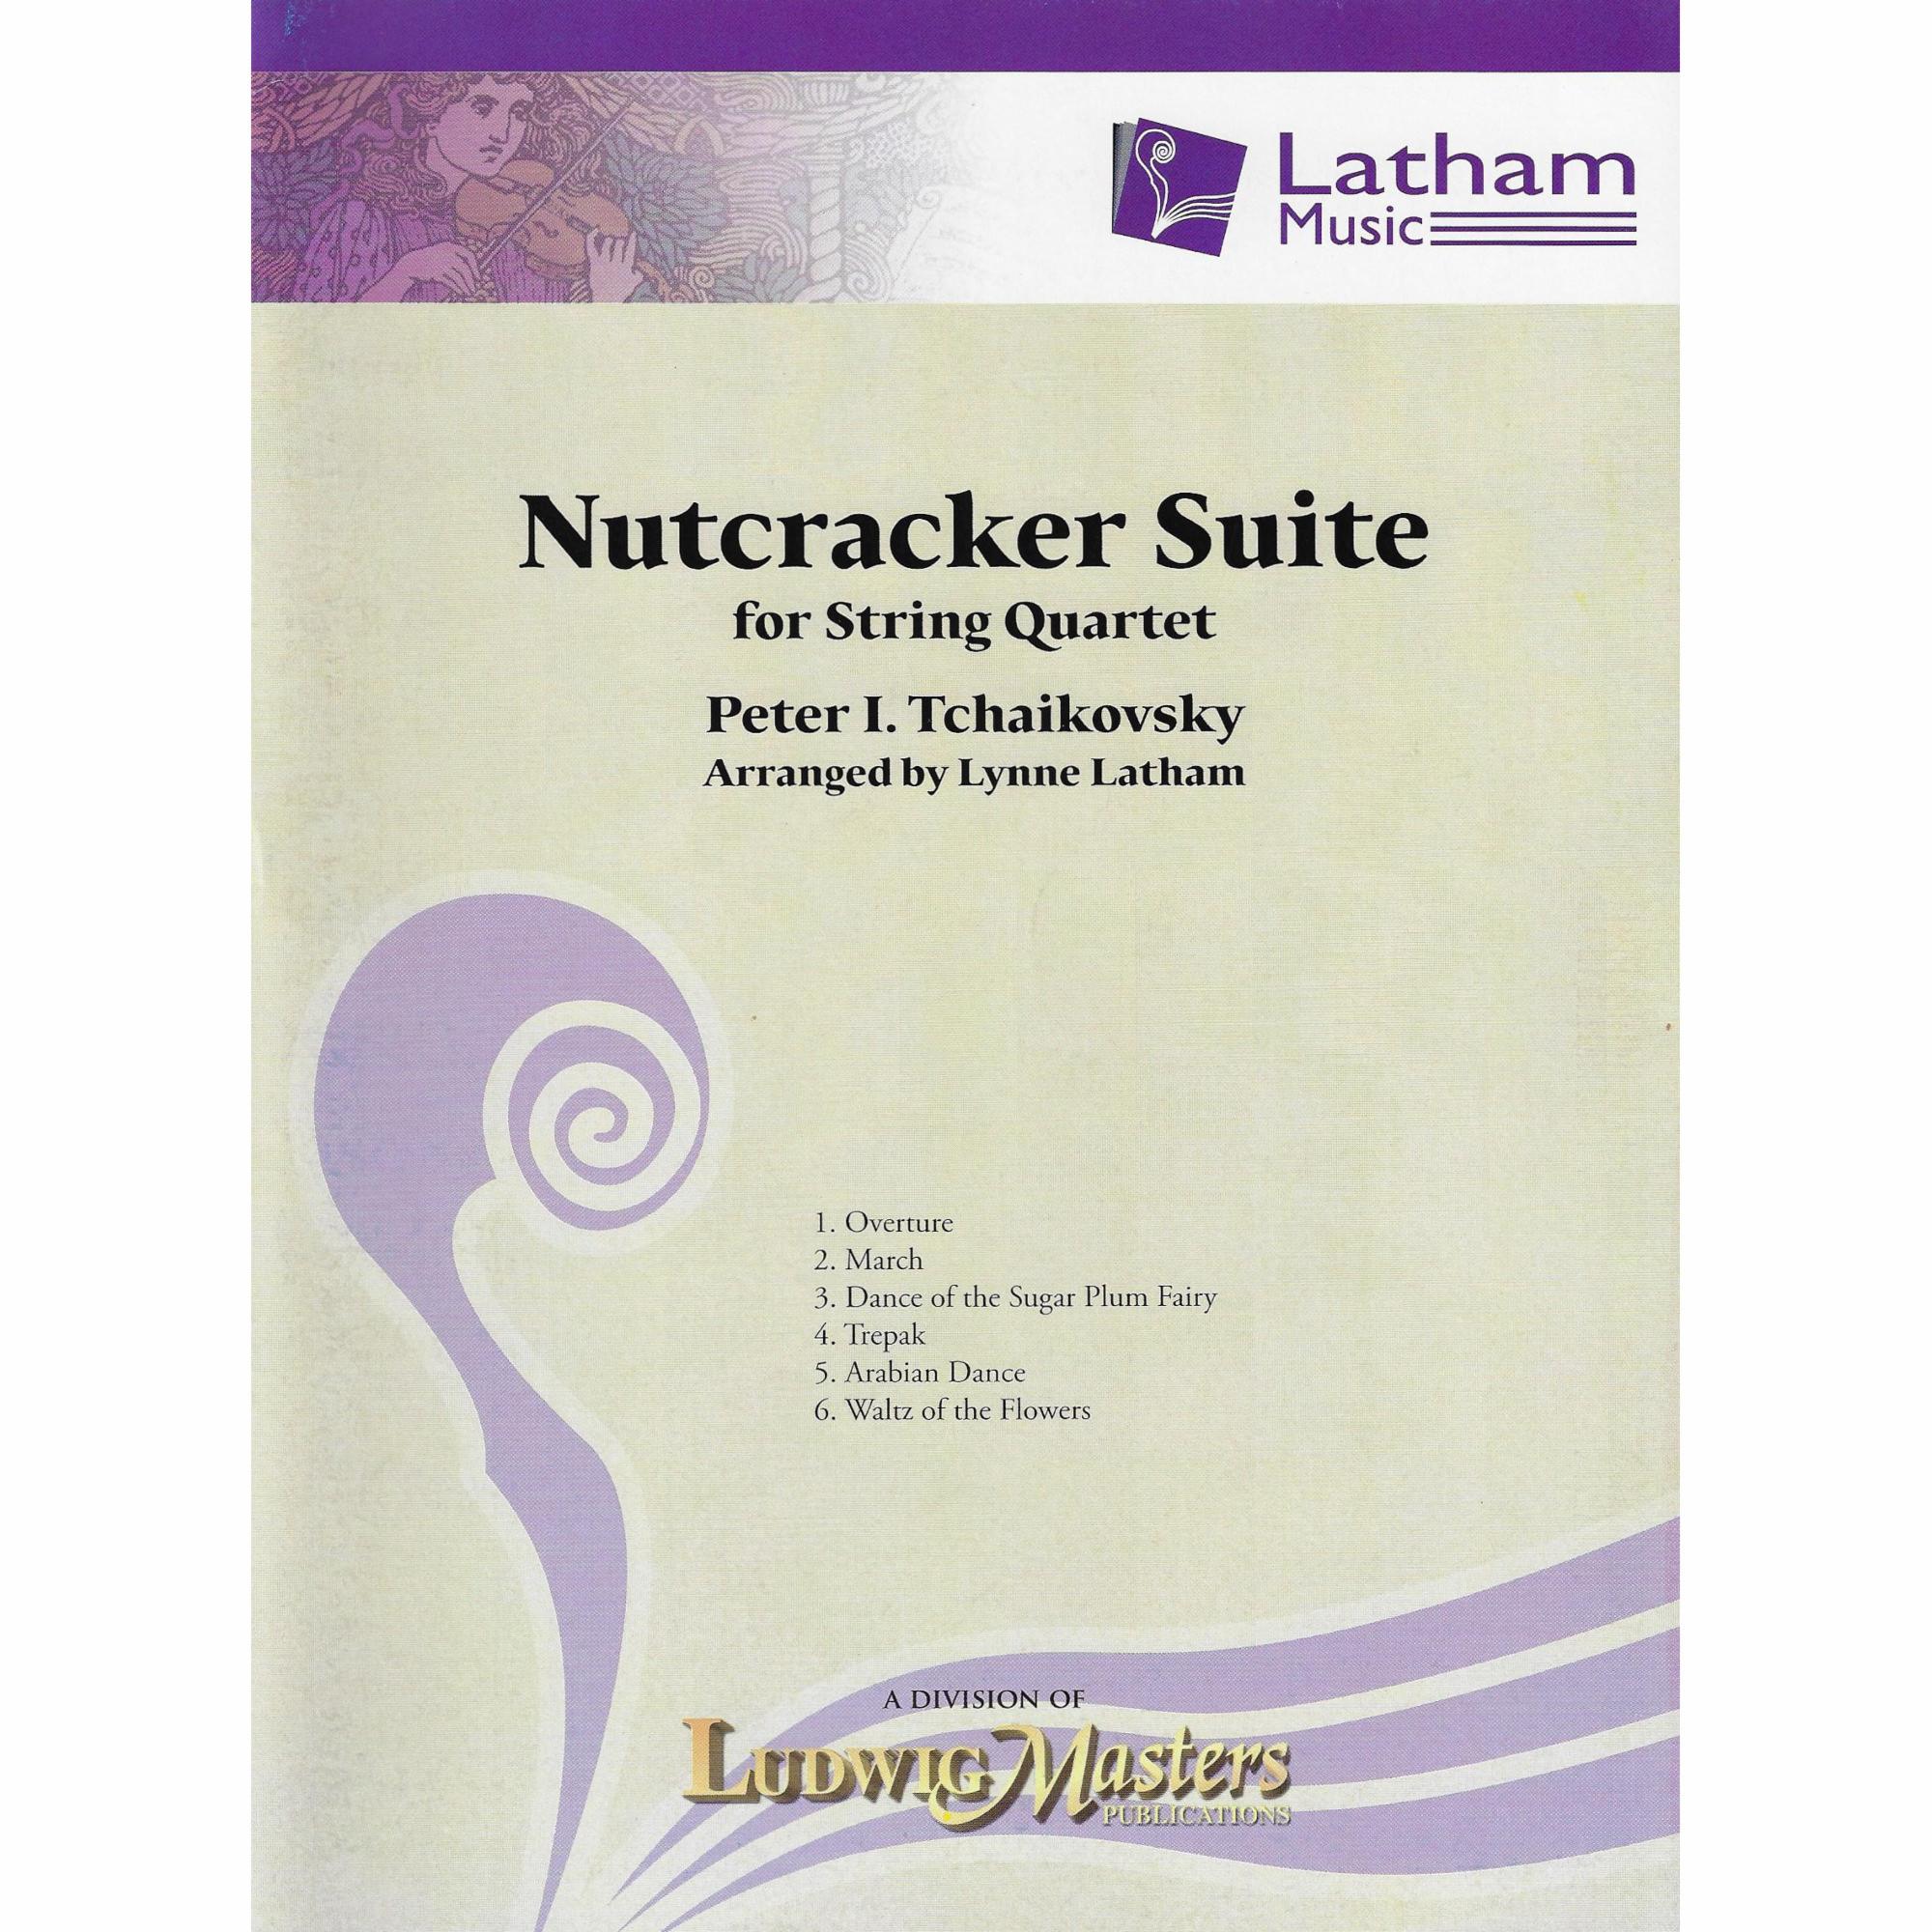 Nutcracker Suite for String Quartet